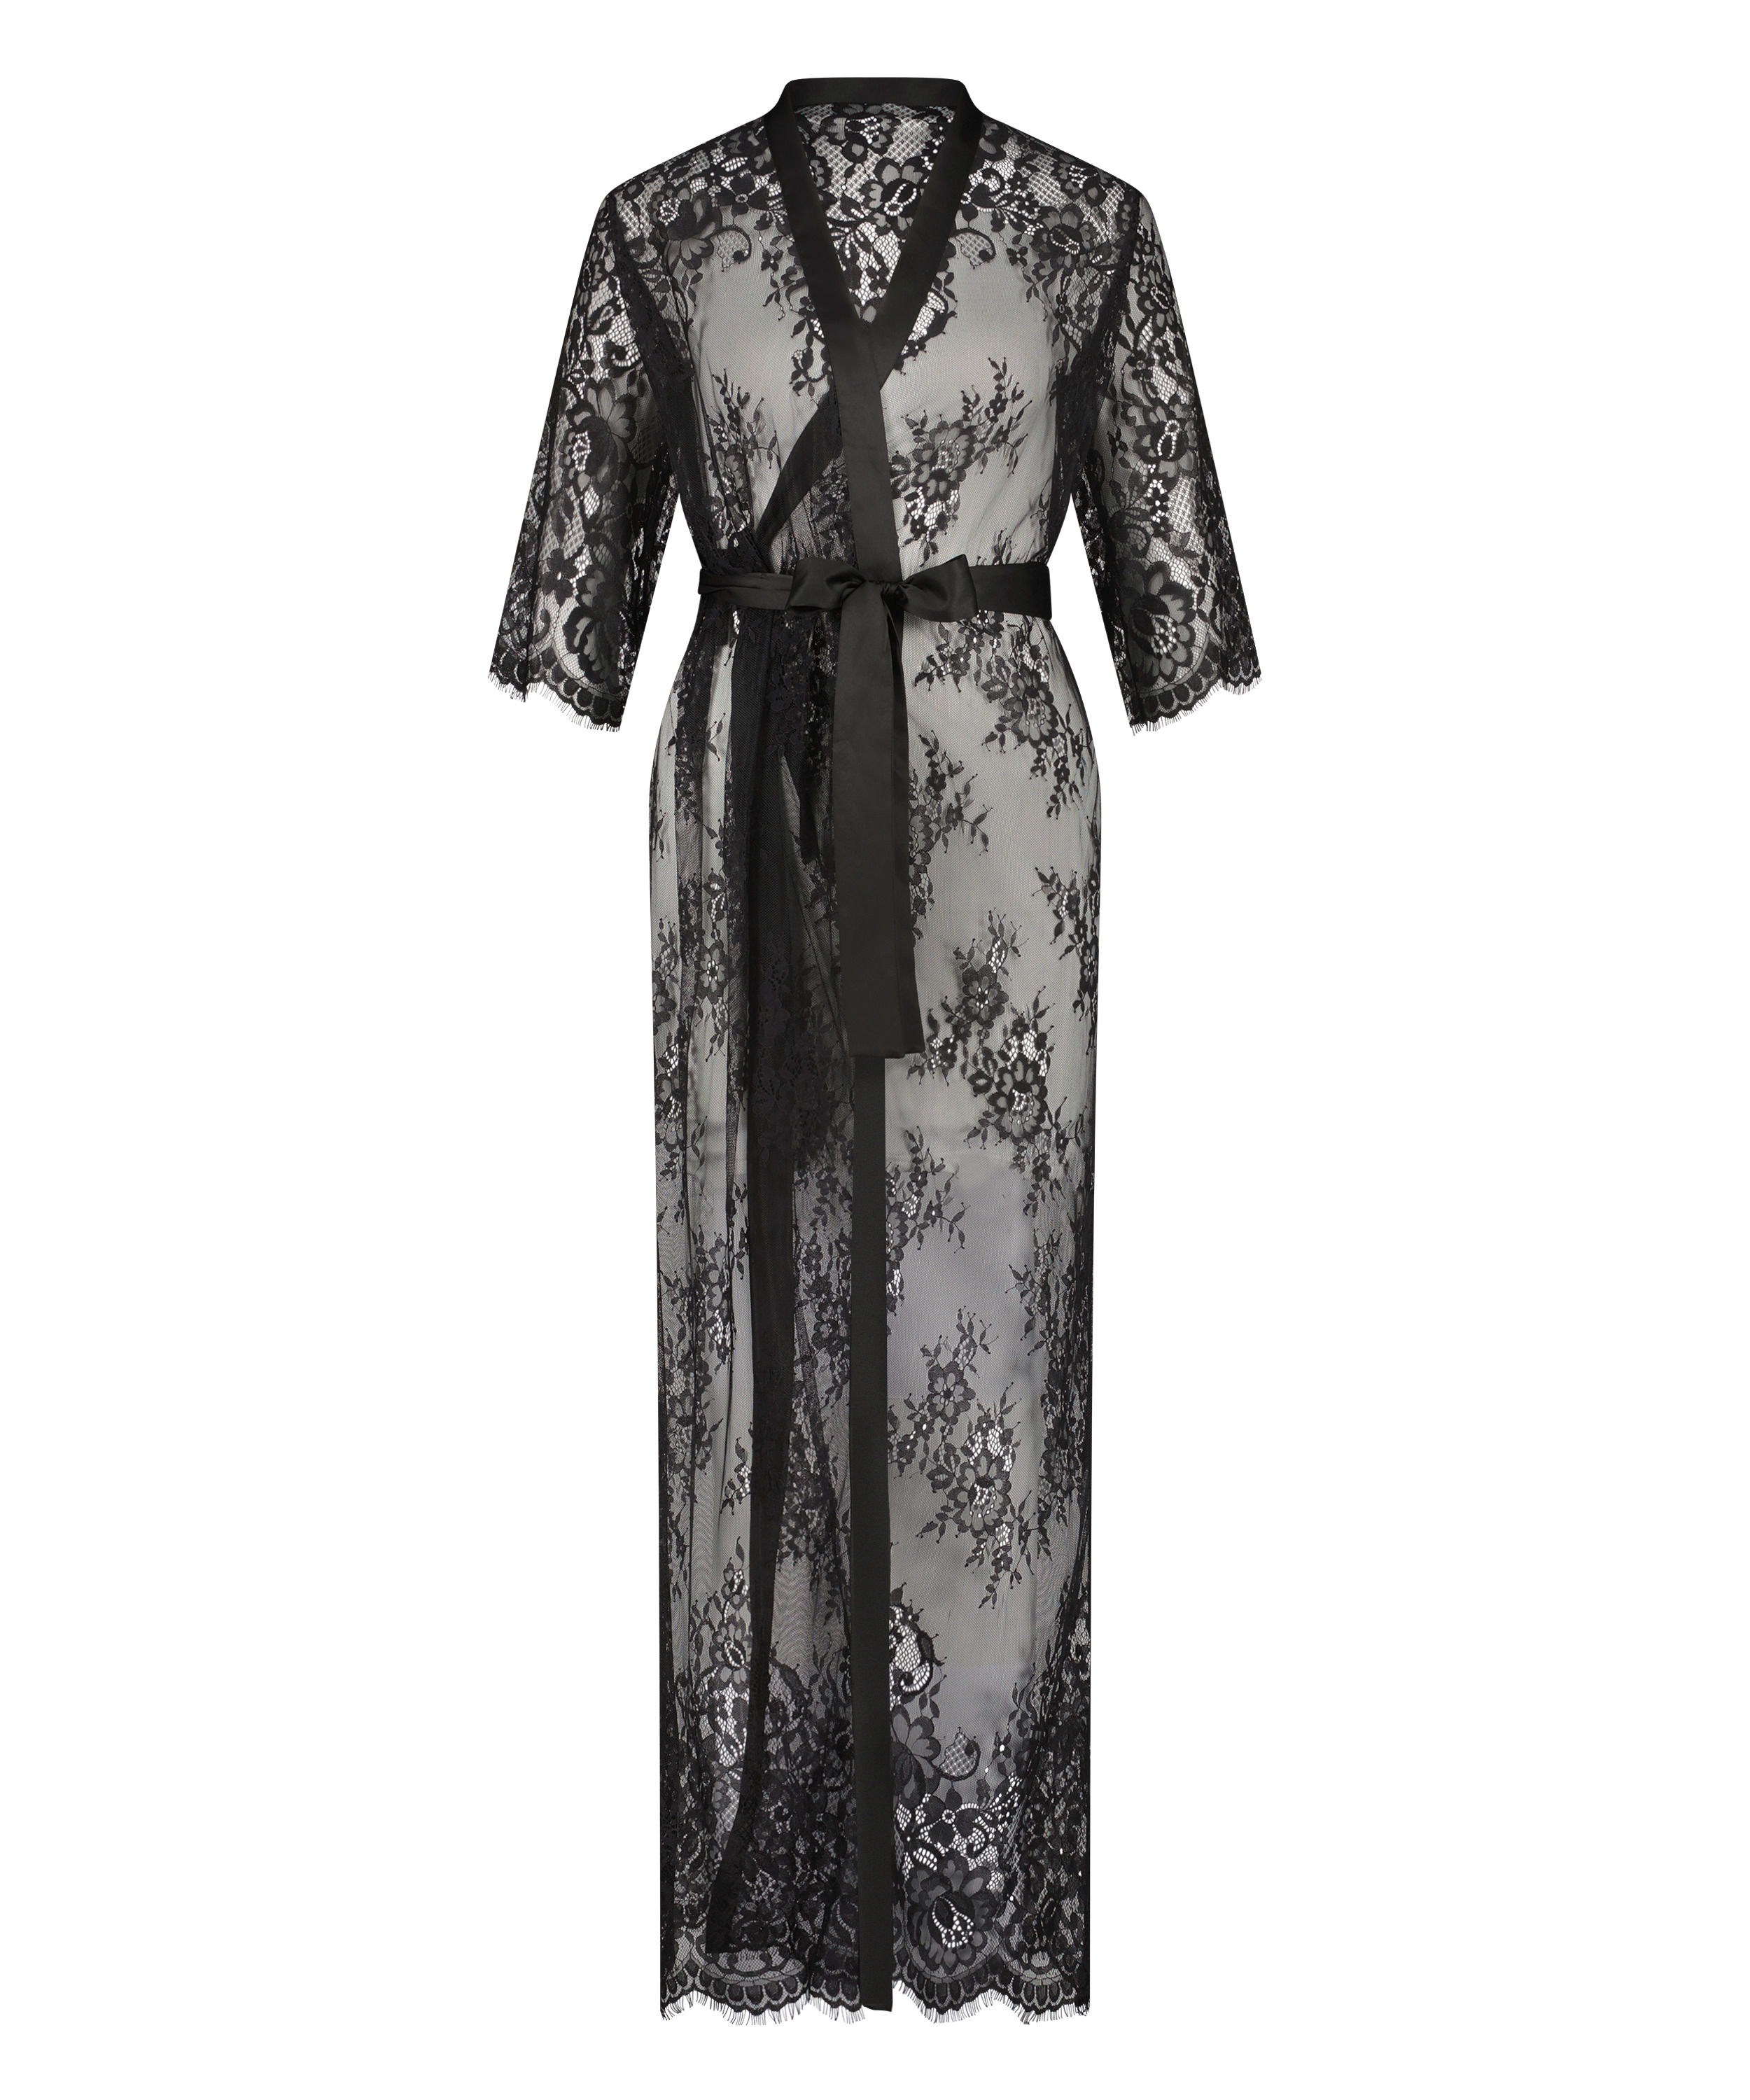 Long Allover Lace Kimono for £48 - All Nightwear - Hunkemöller